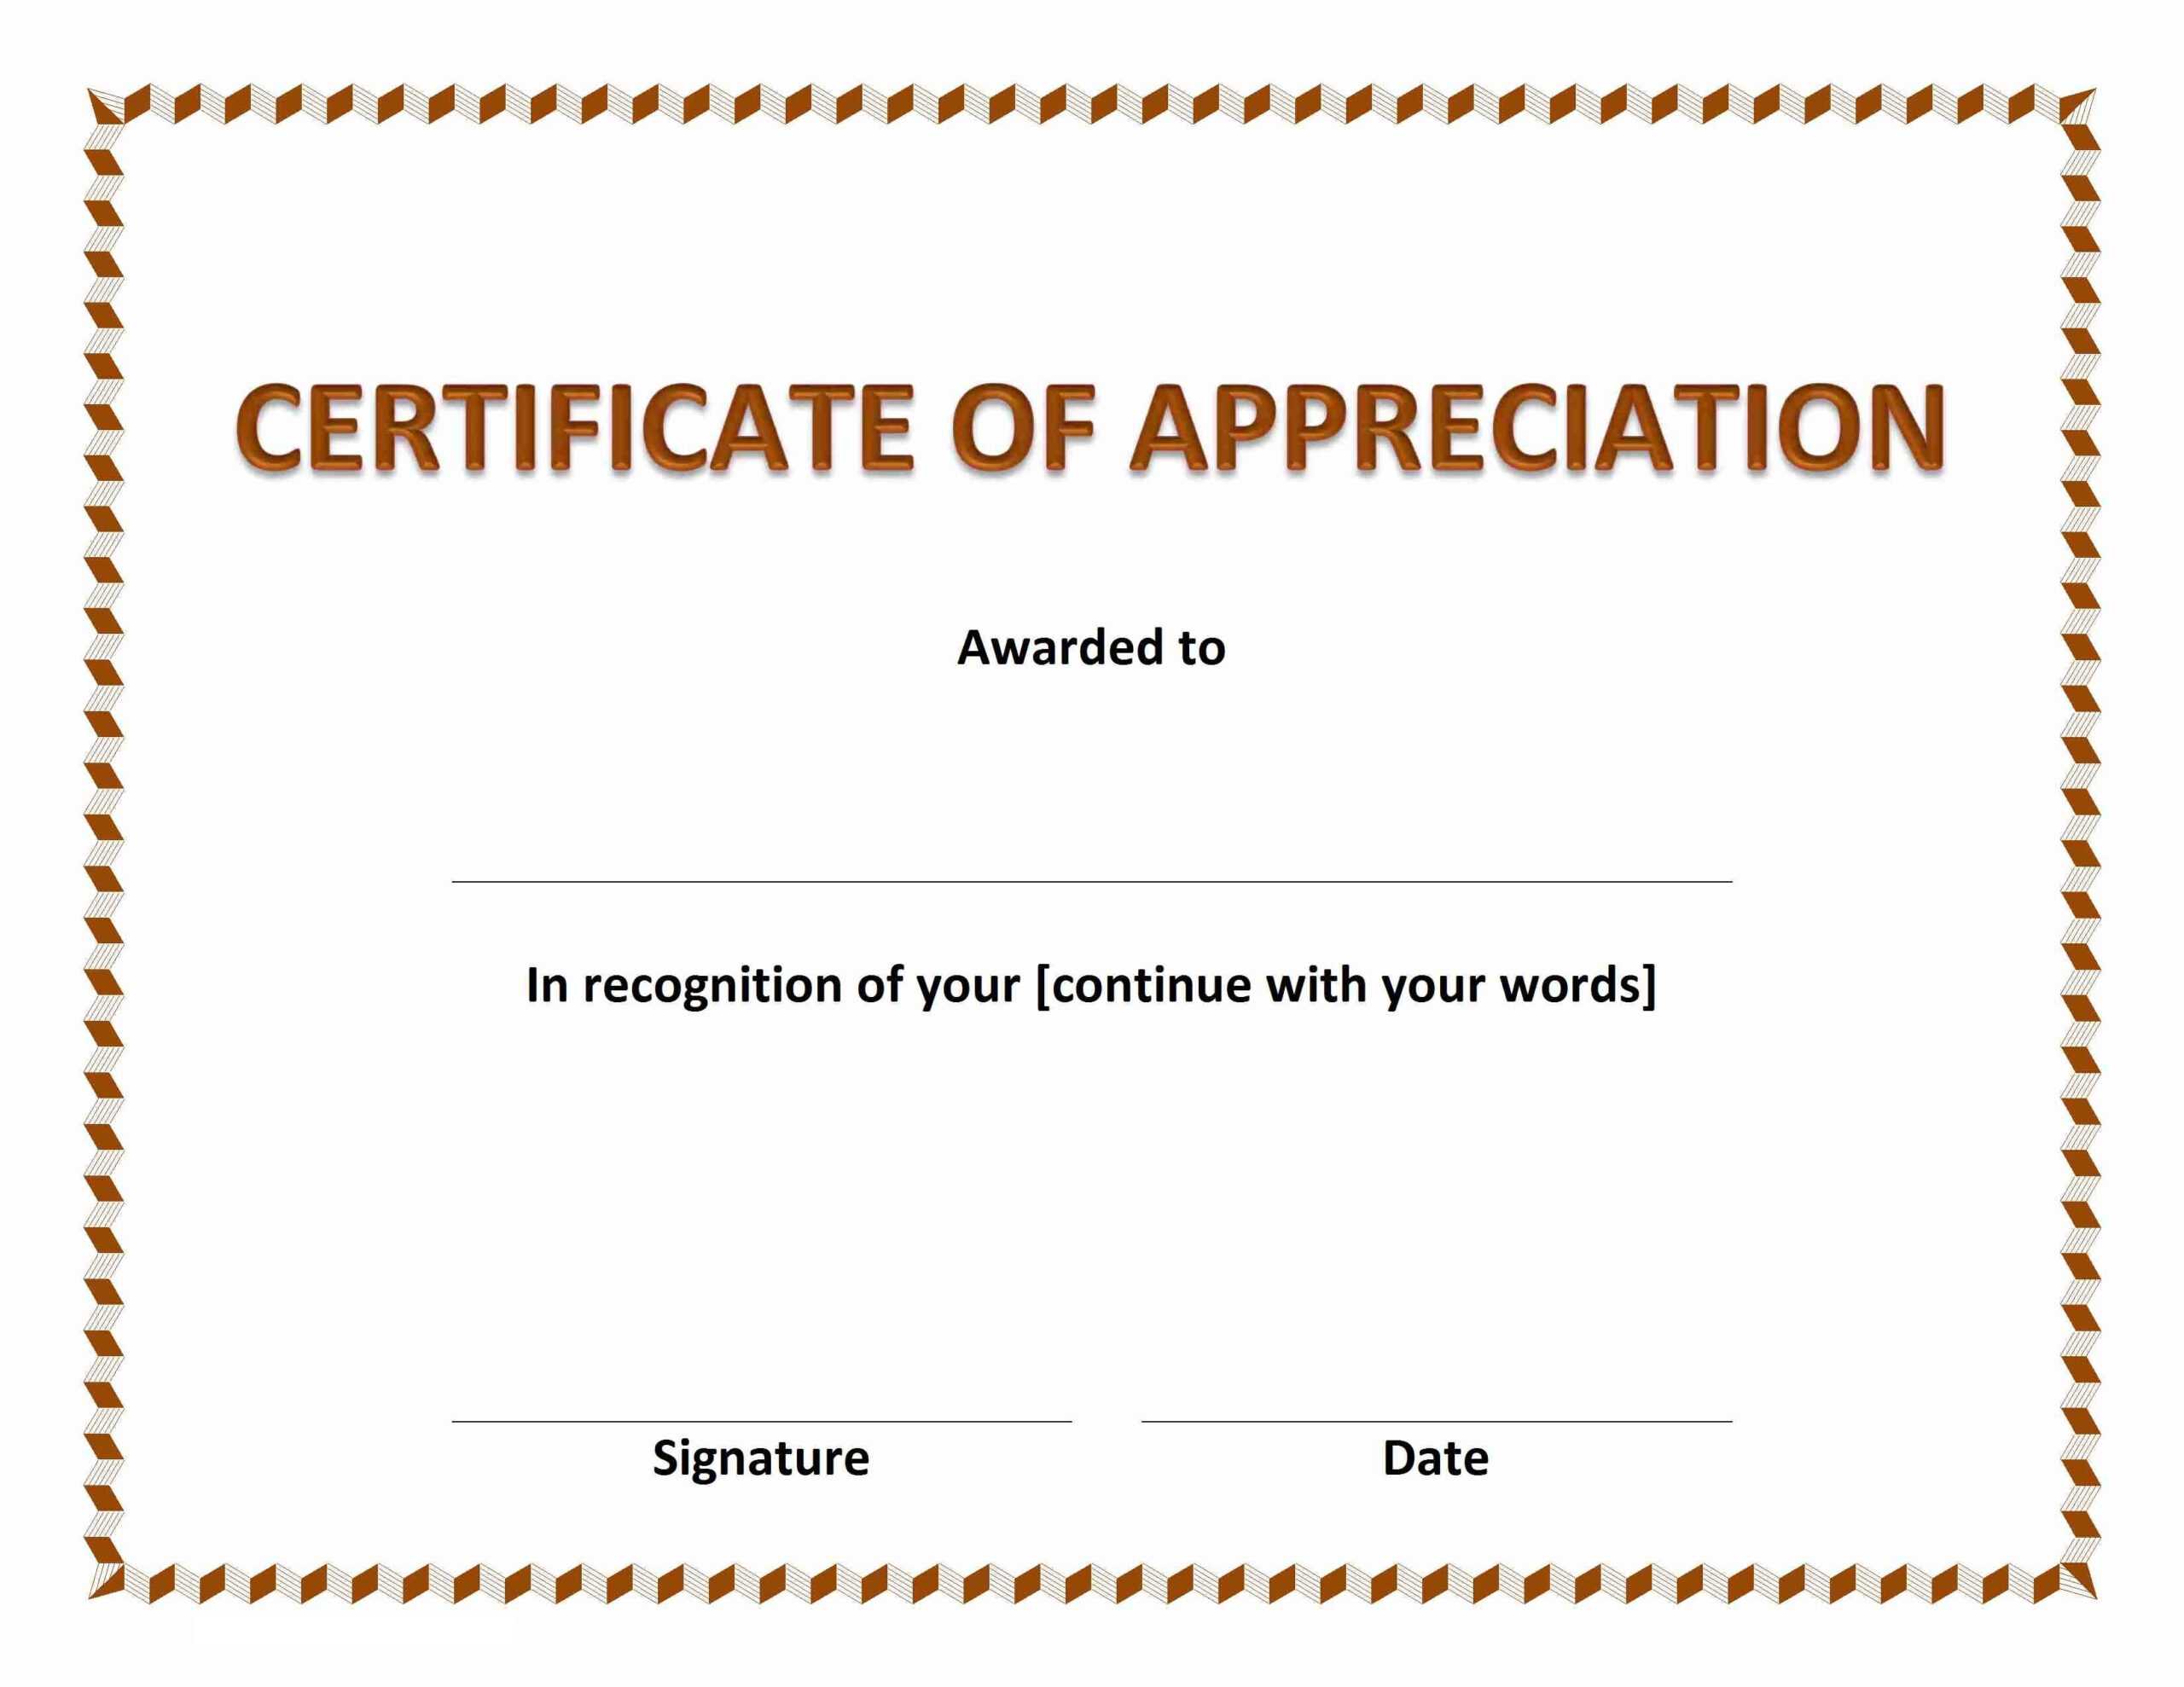 Certificates. Popular Certificate Of Appreciation Template Regarding Certificates Of Appreciation Template